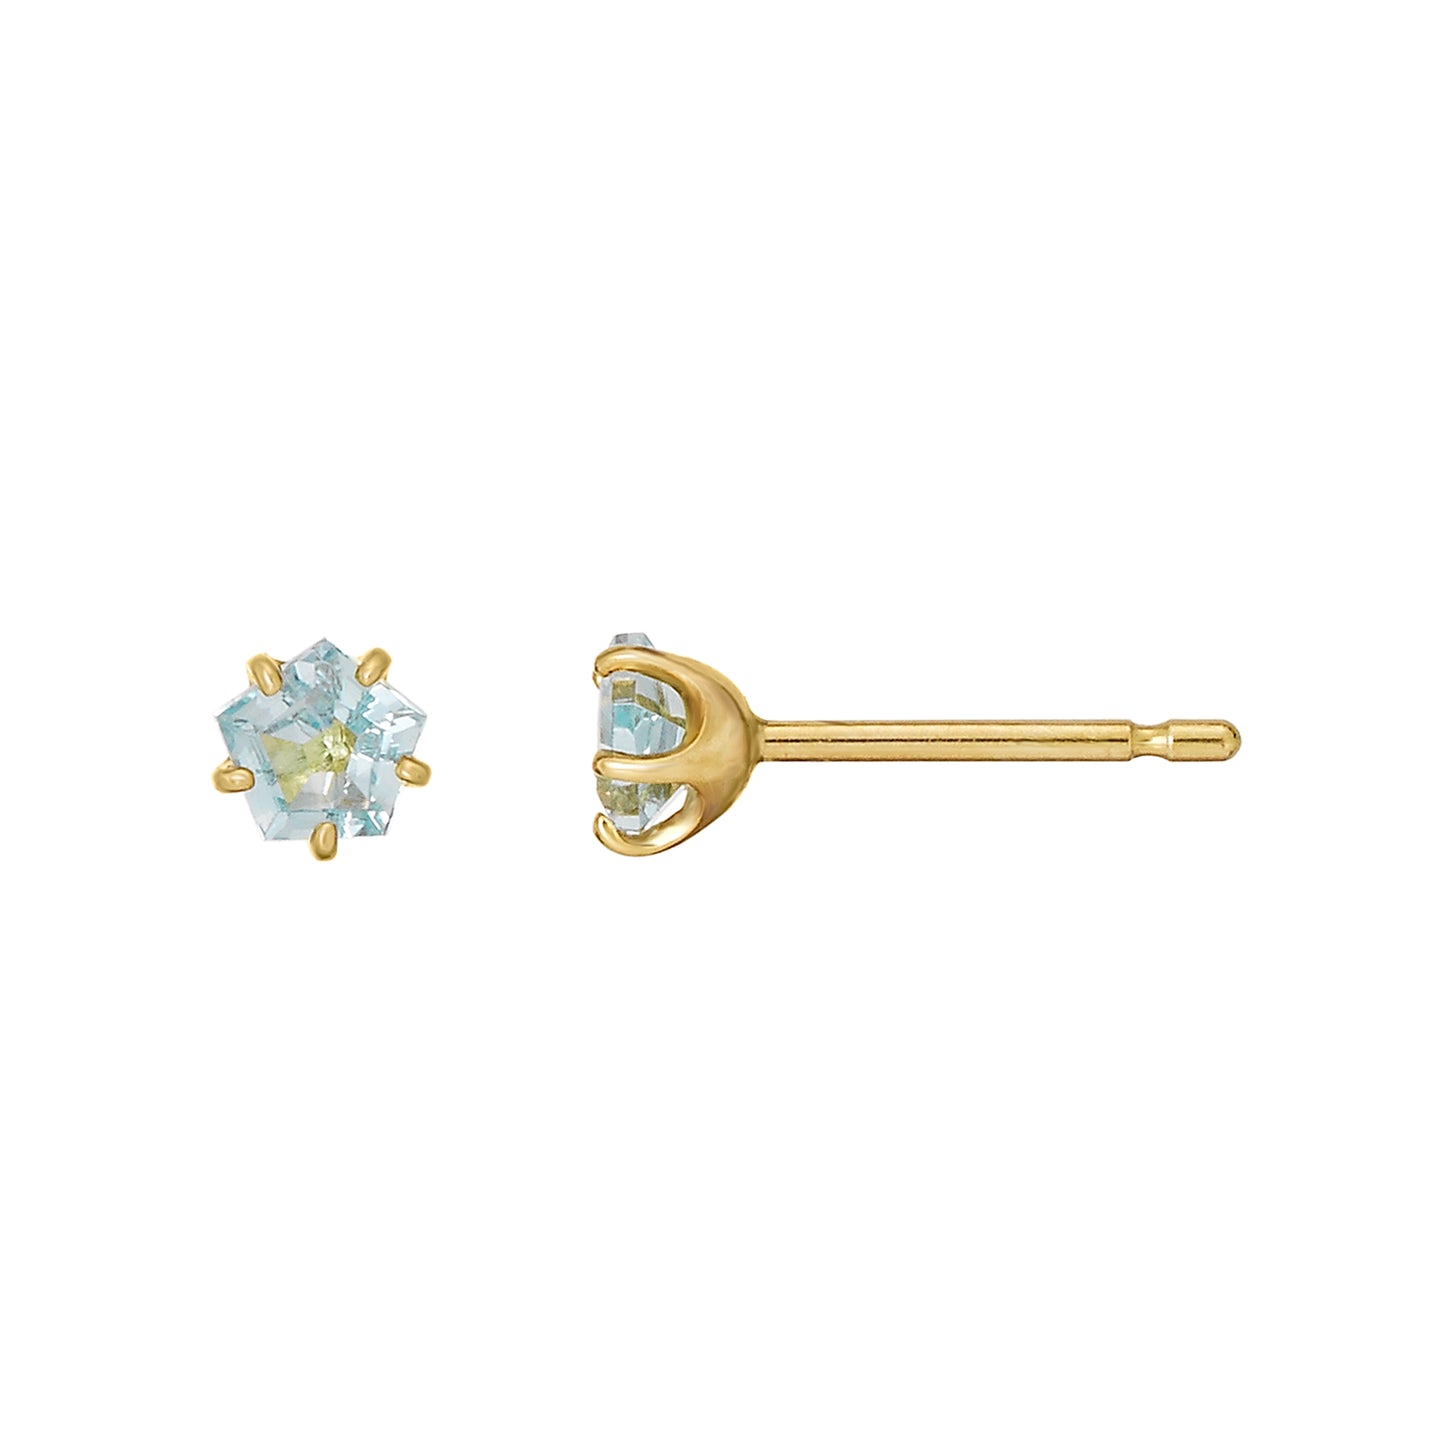 [Second Earrings] 18K Yellow Gold Blue Topaz Pentagon Cut Earrings - Product Image